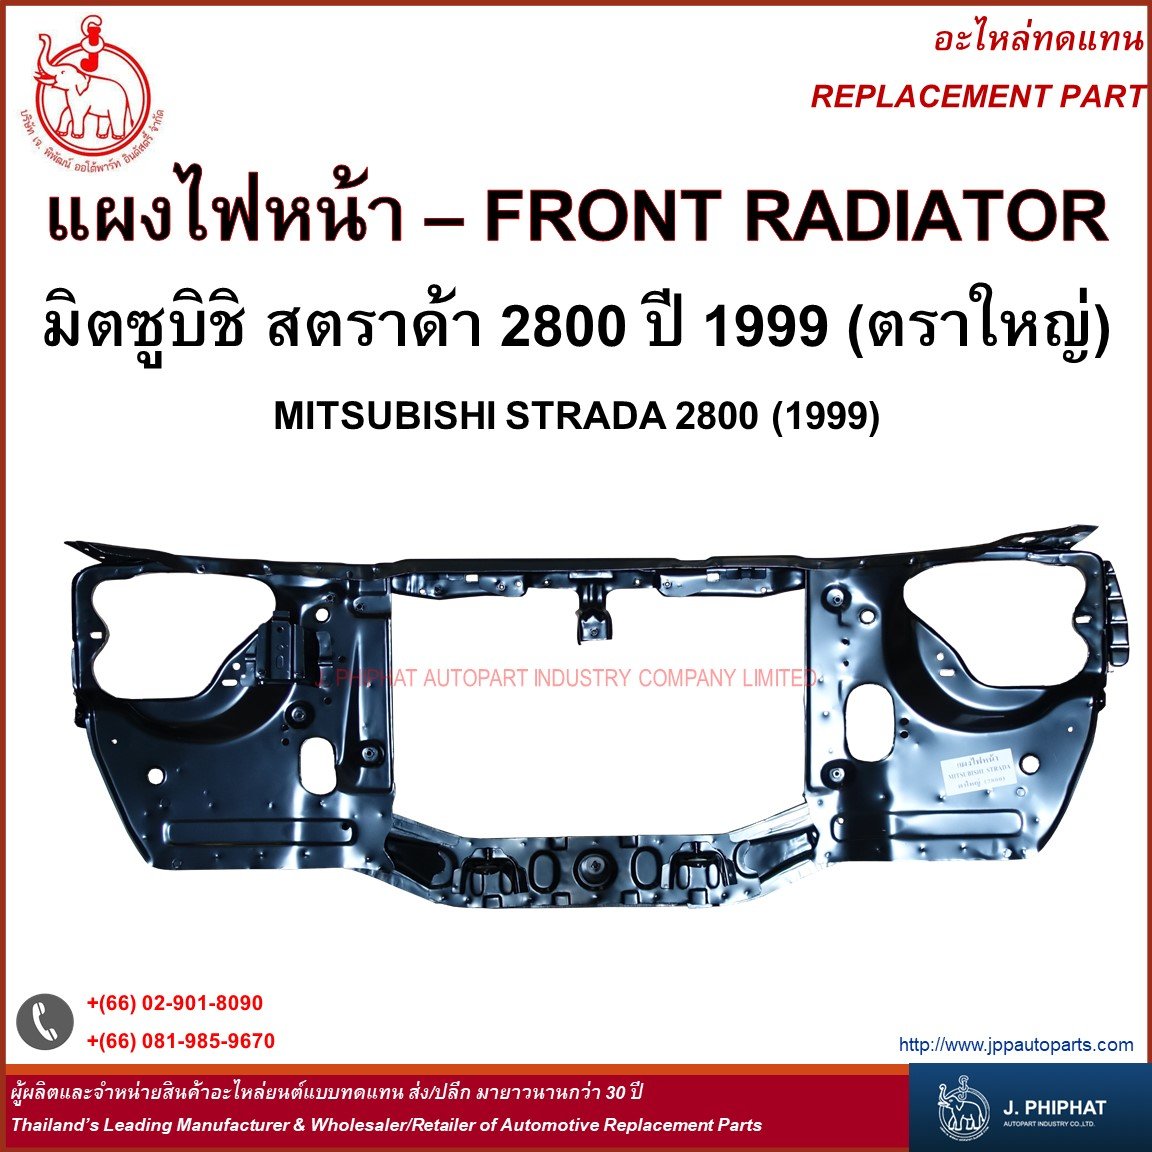 Front Radiator - Mitsubishi Strada 2800 '99